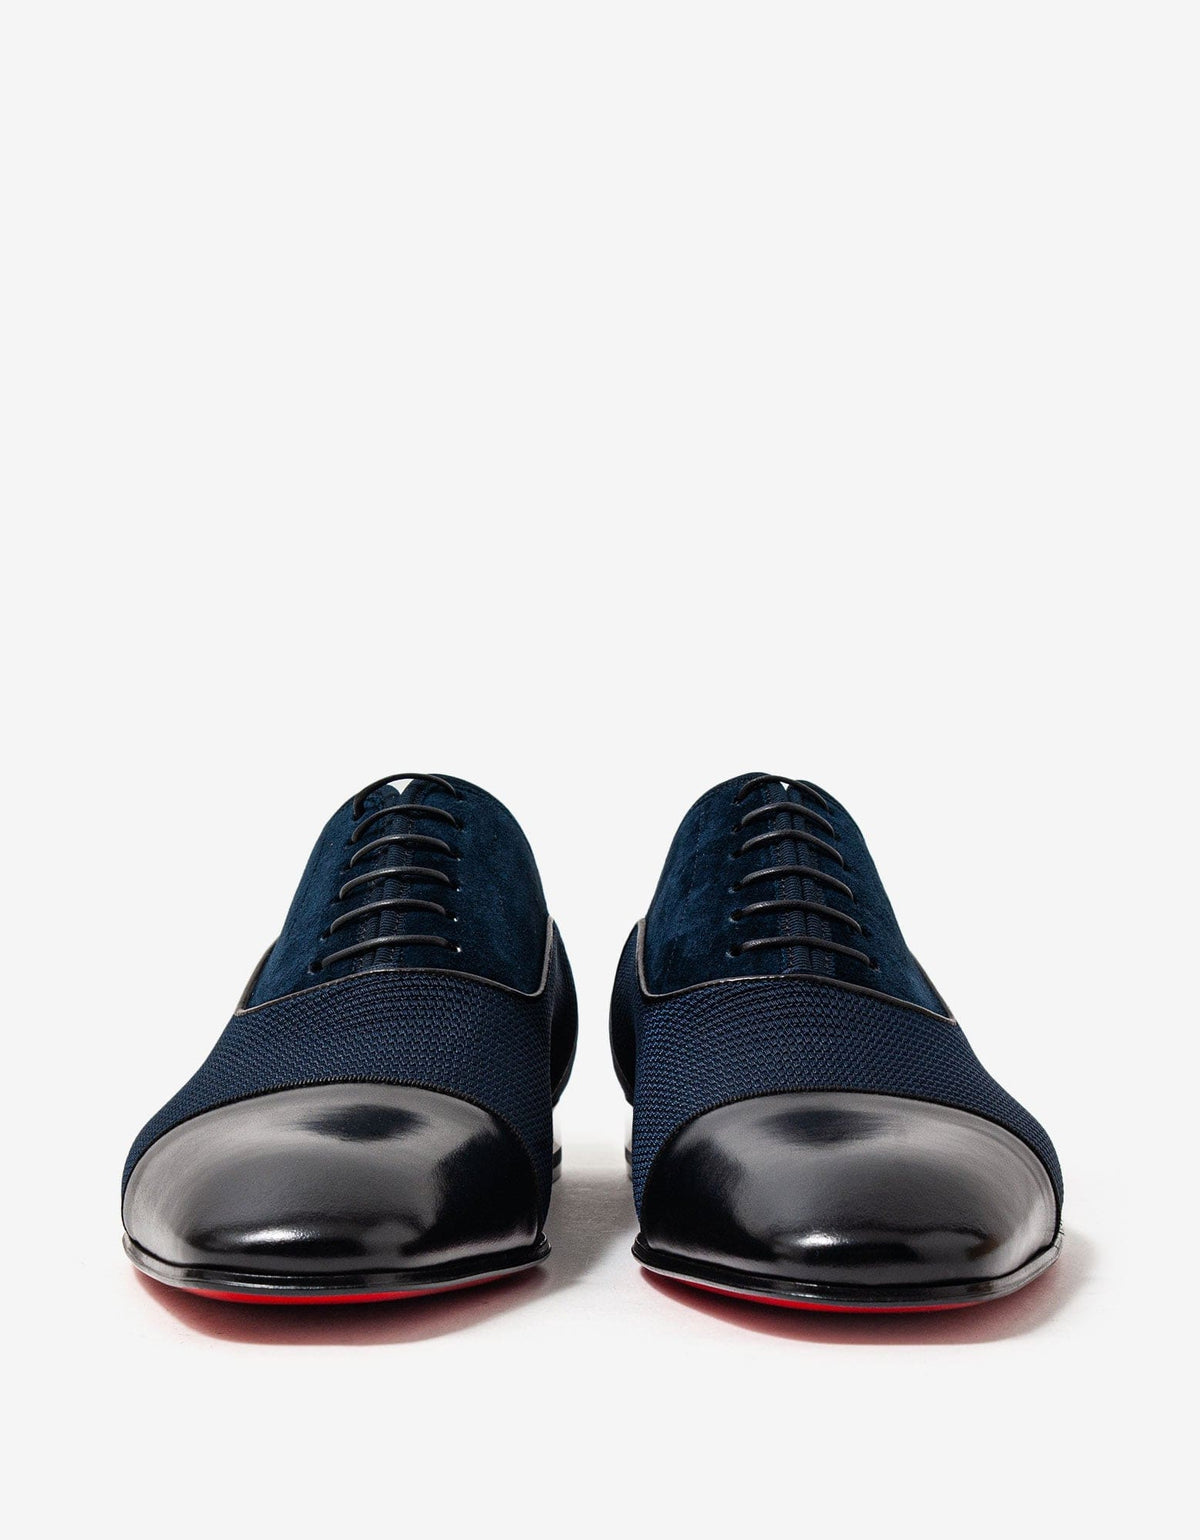 Christian Louboutin Blue & Black Greggo Orlato Flat Oxford Shoes -